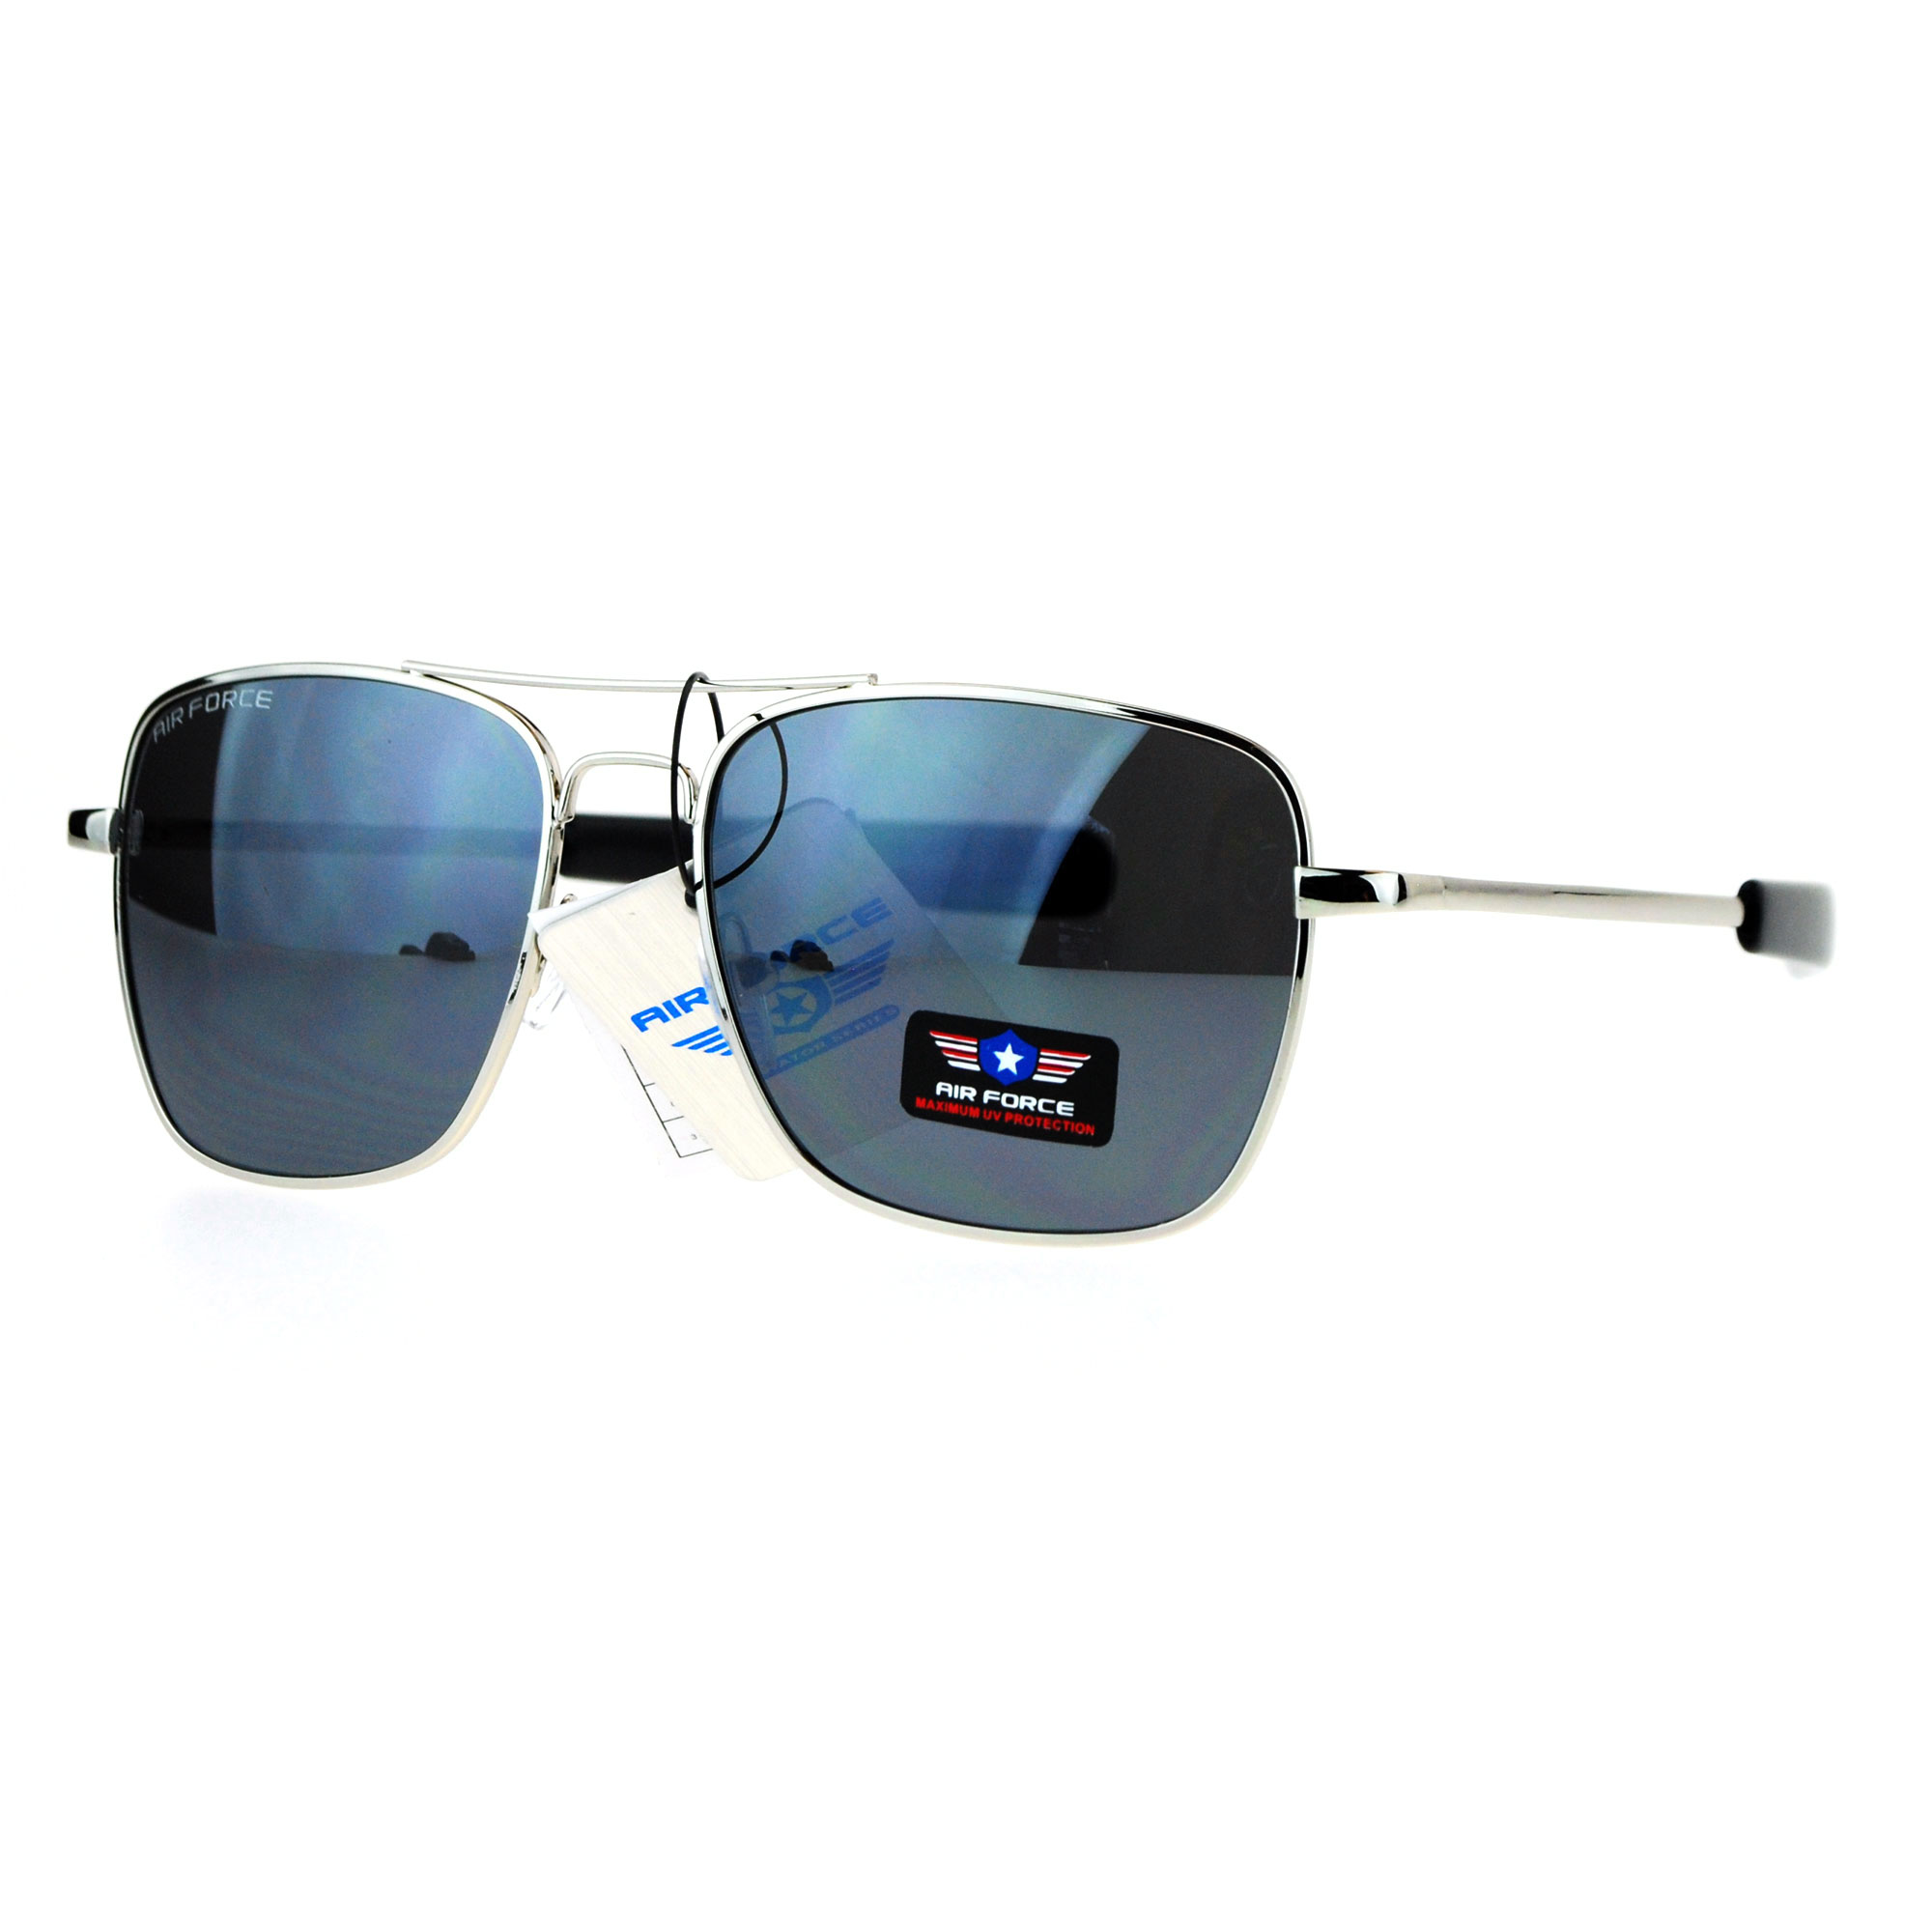 Air Force - Gafas de sol para hombre, diseño de aviadores